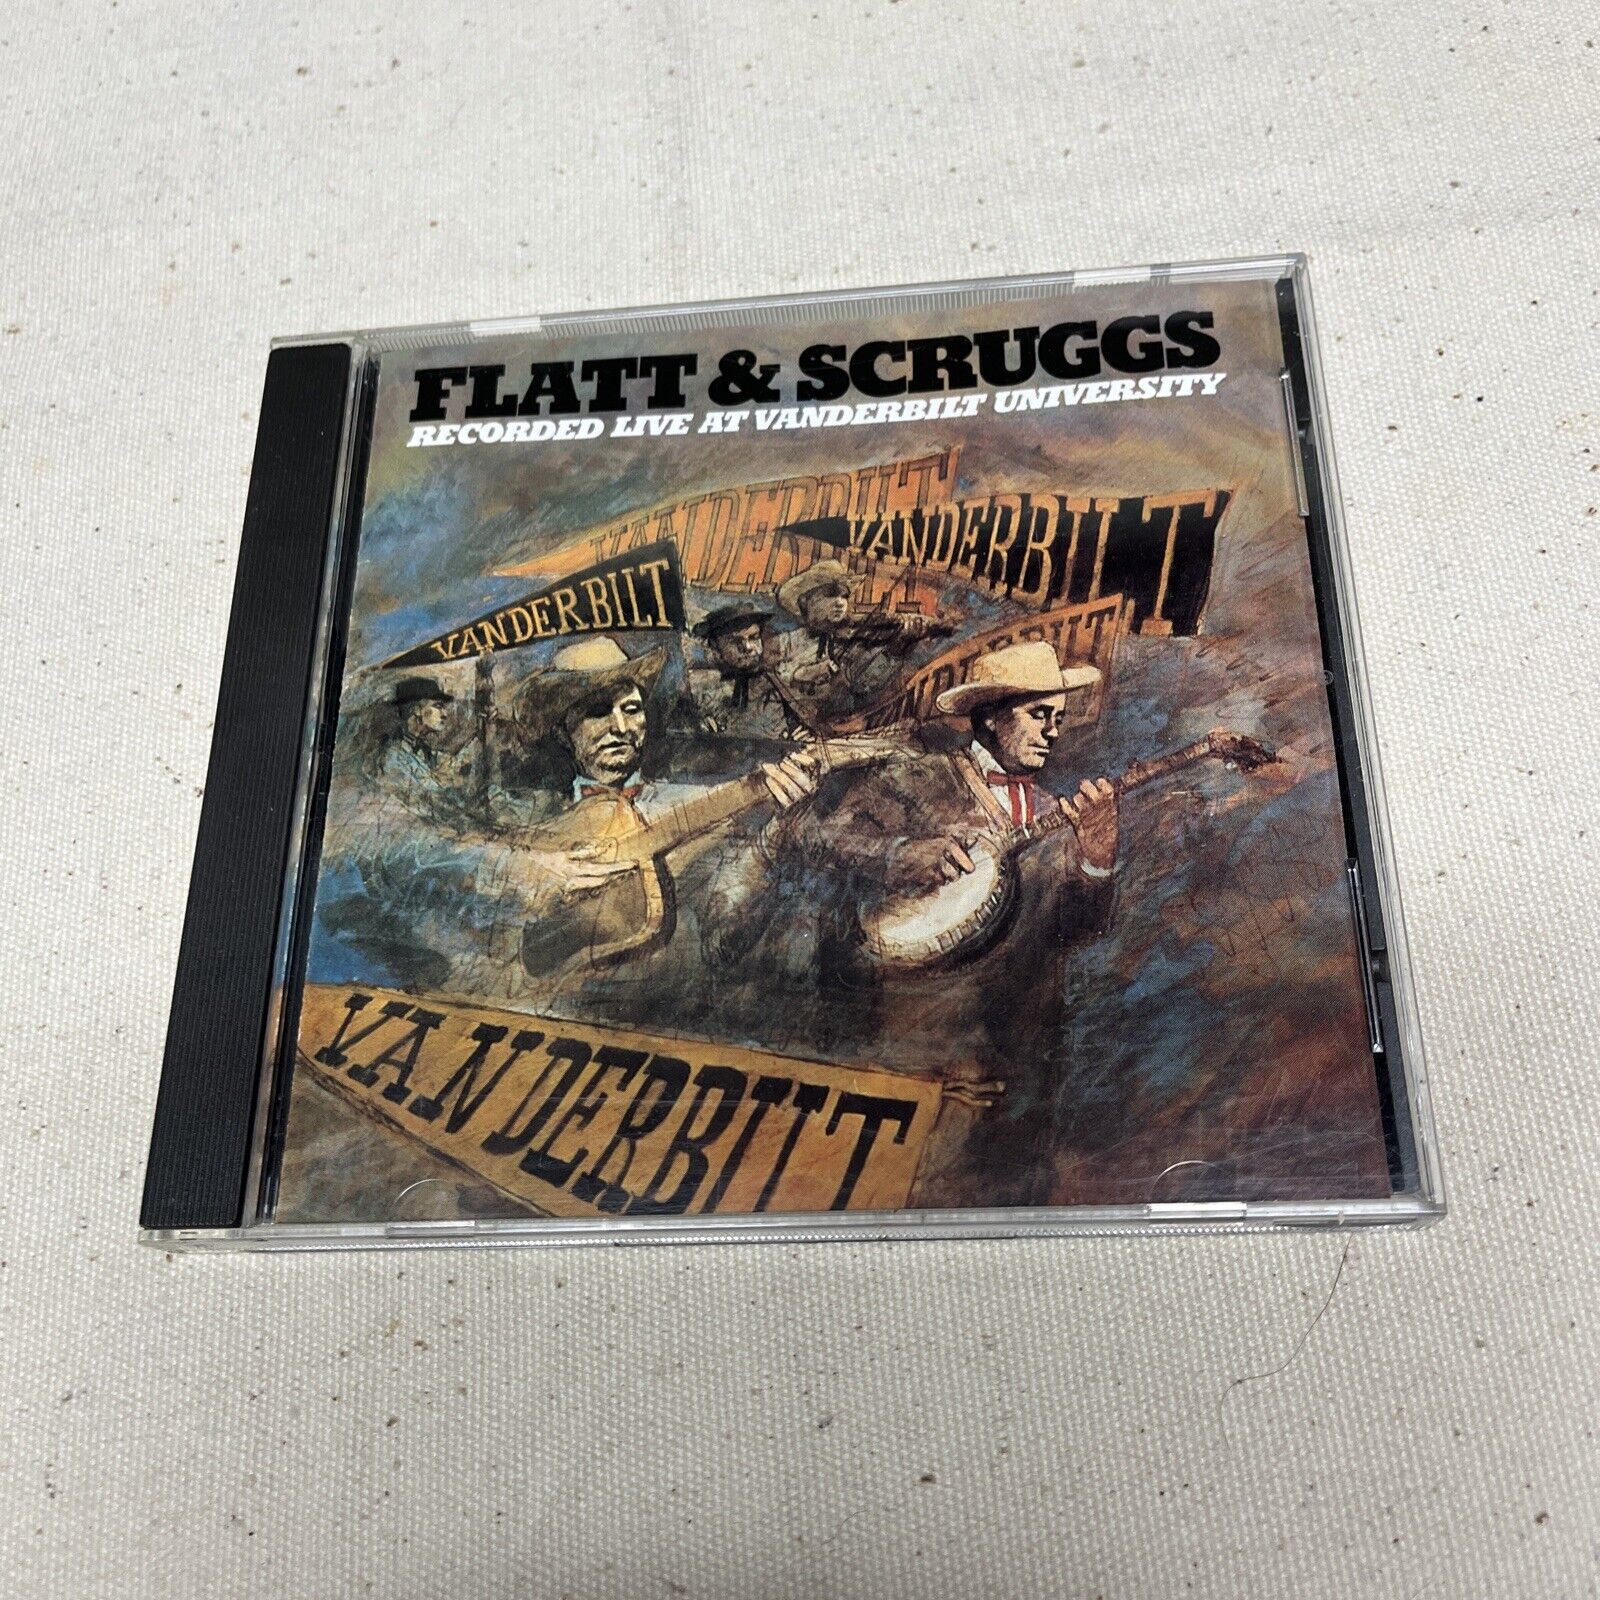 Live at Vanderbilt University by Flatt & Scruggs (CD, Collectors Series)